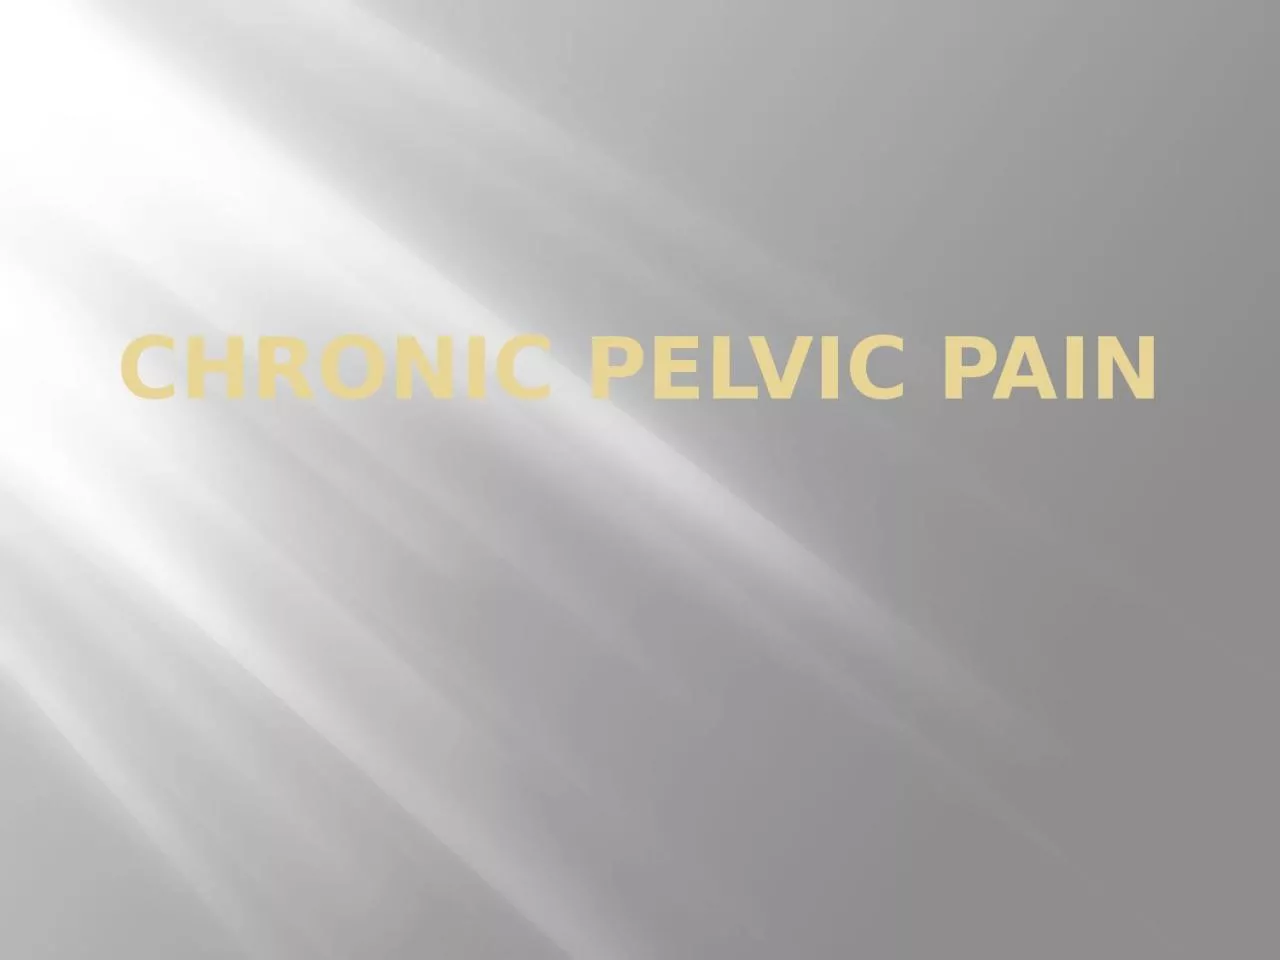 Chronic Pelvic Pain Definition: